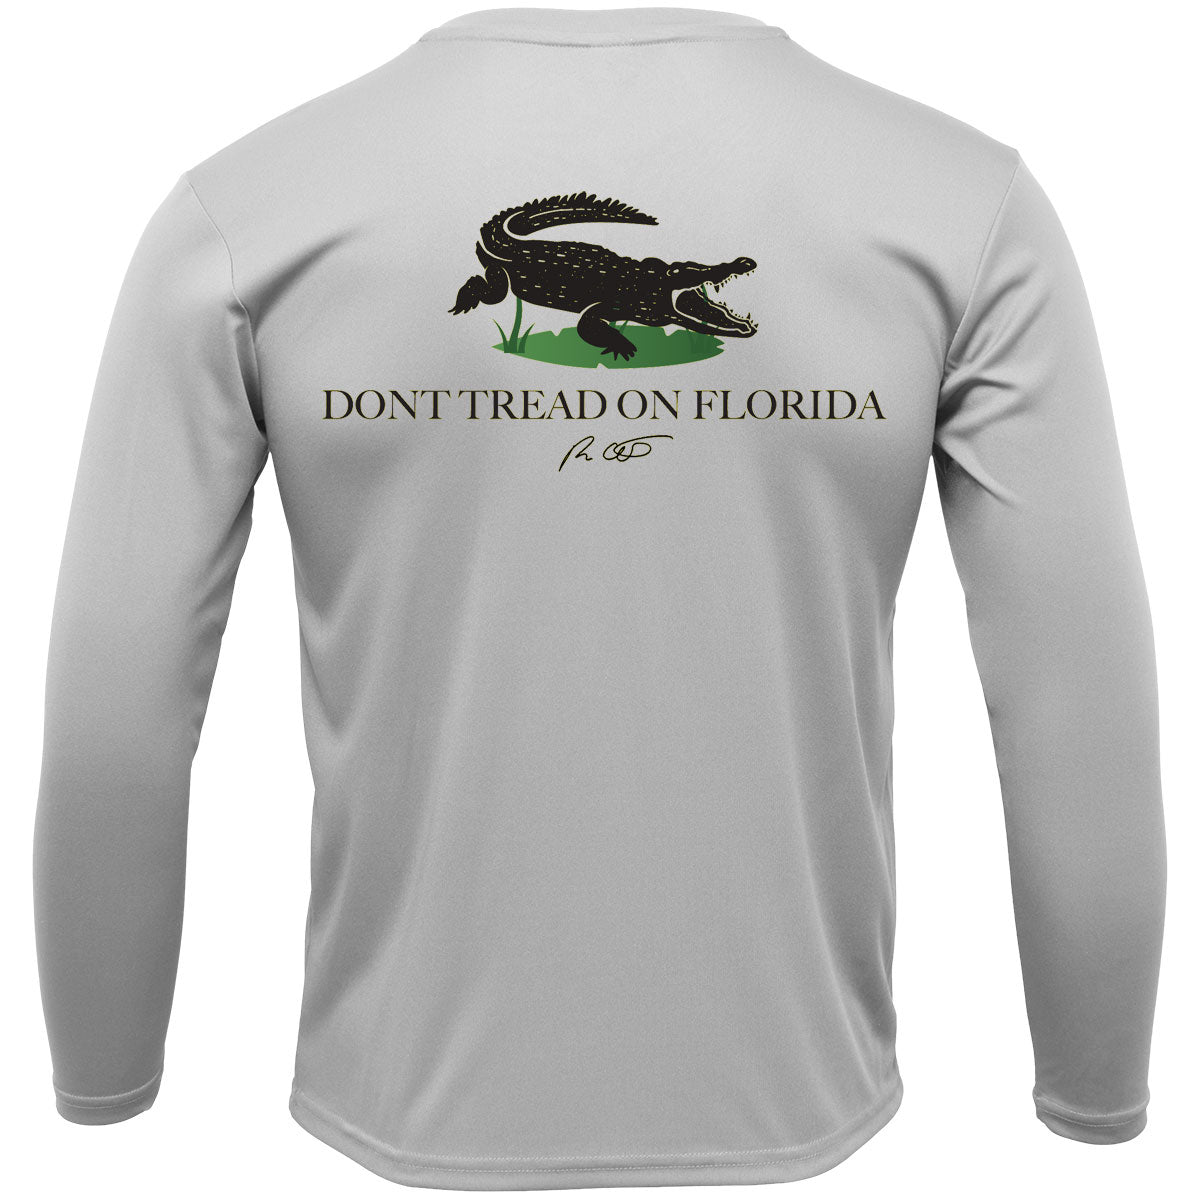 NEW ARTWORK] Don't Tread On Florida Fishing Shirt with Florida